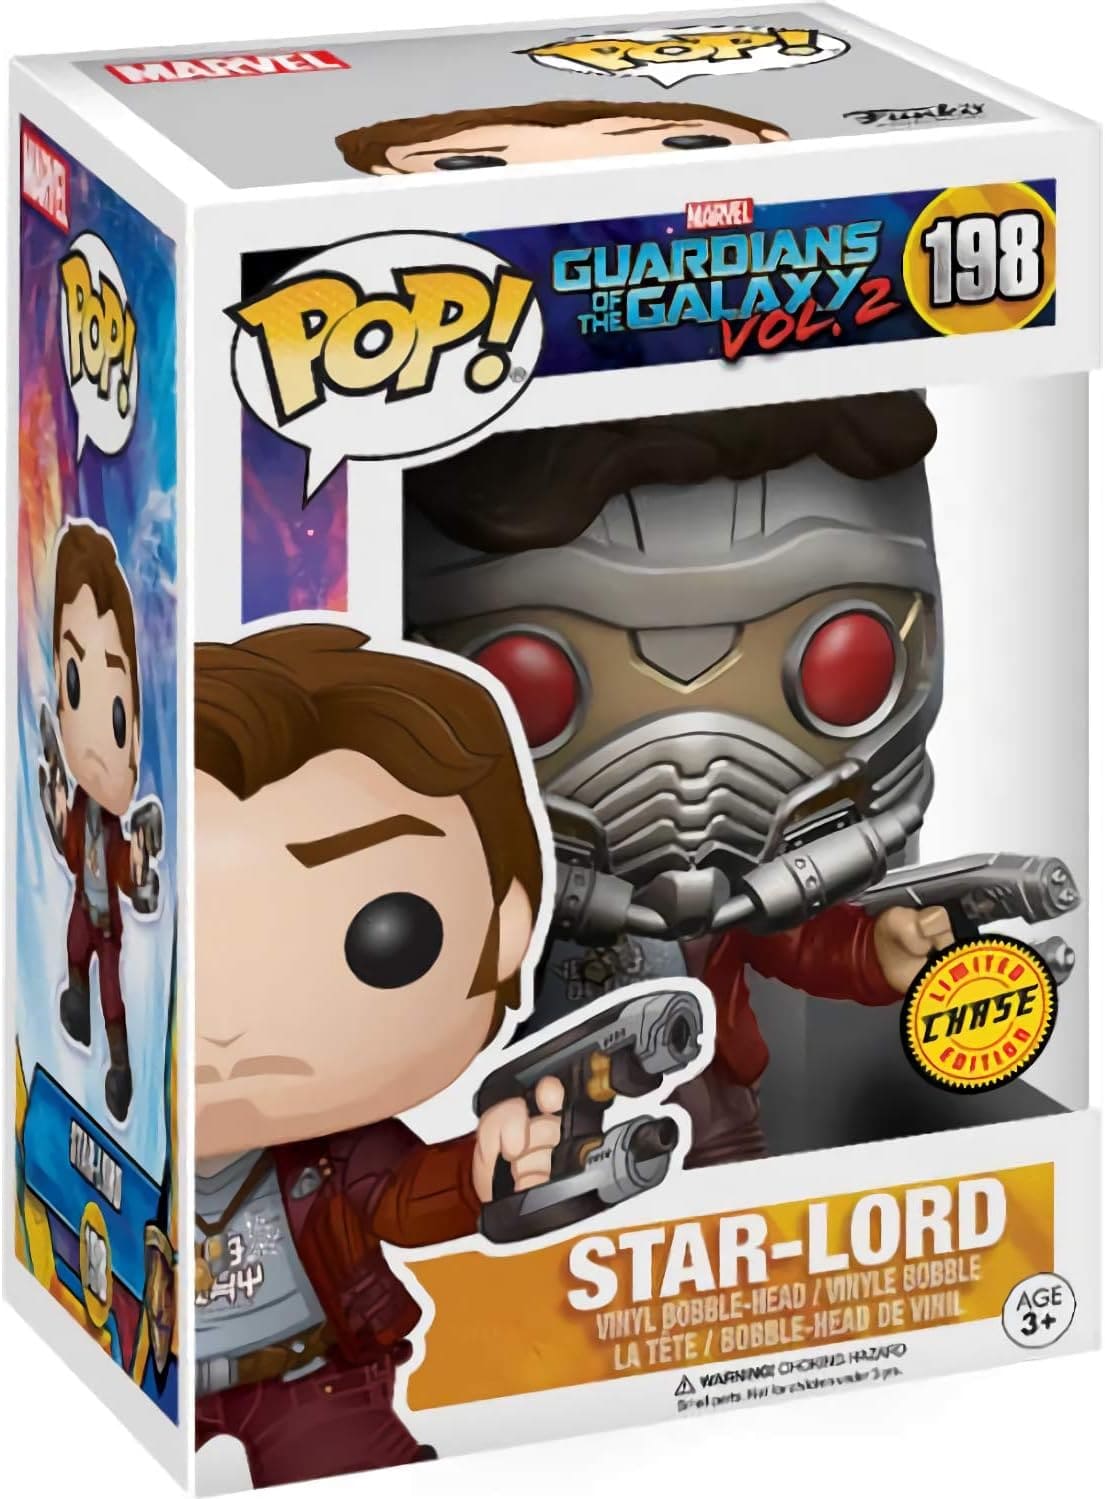 Виниловая фигурка Funko POP! Star-Lord (Chase Edition): Guardians of The Galaxy 2 Marvel (в прозрачном боксе) фигурка утка tubbz destiny – lord shaxx 9 см